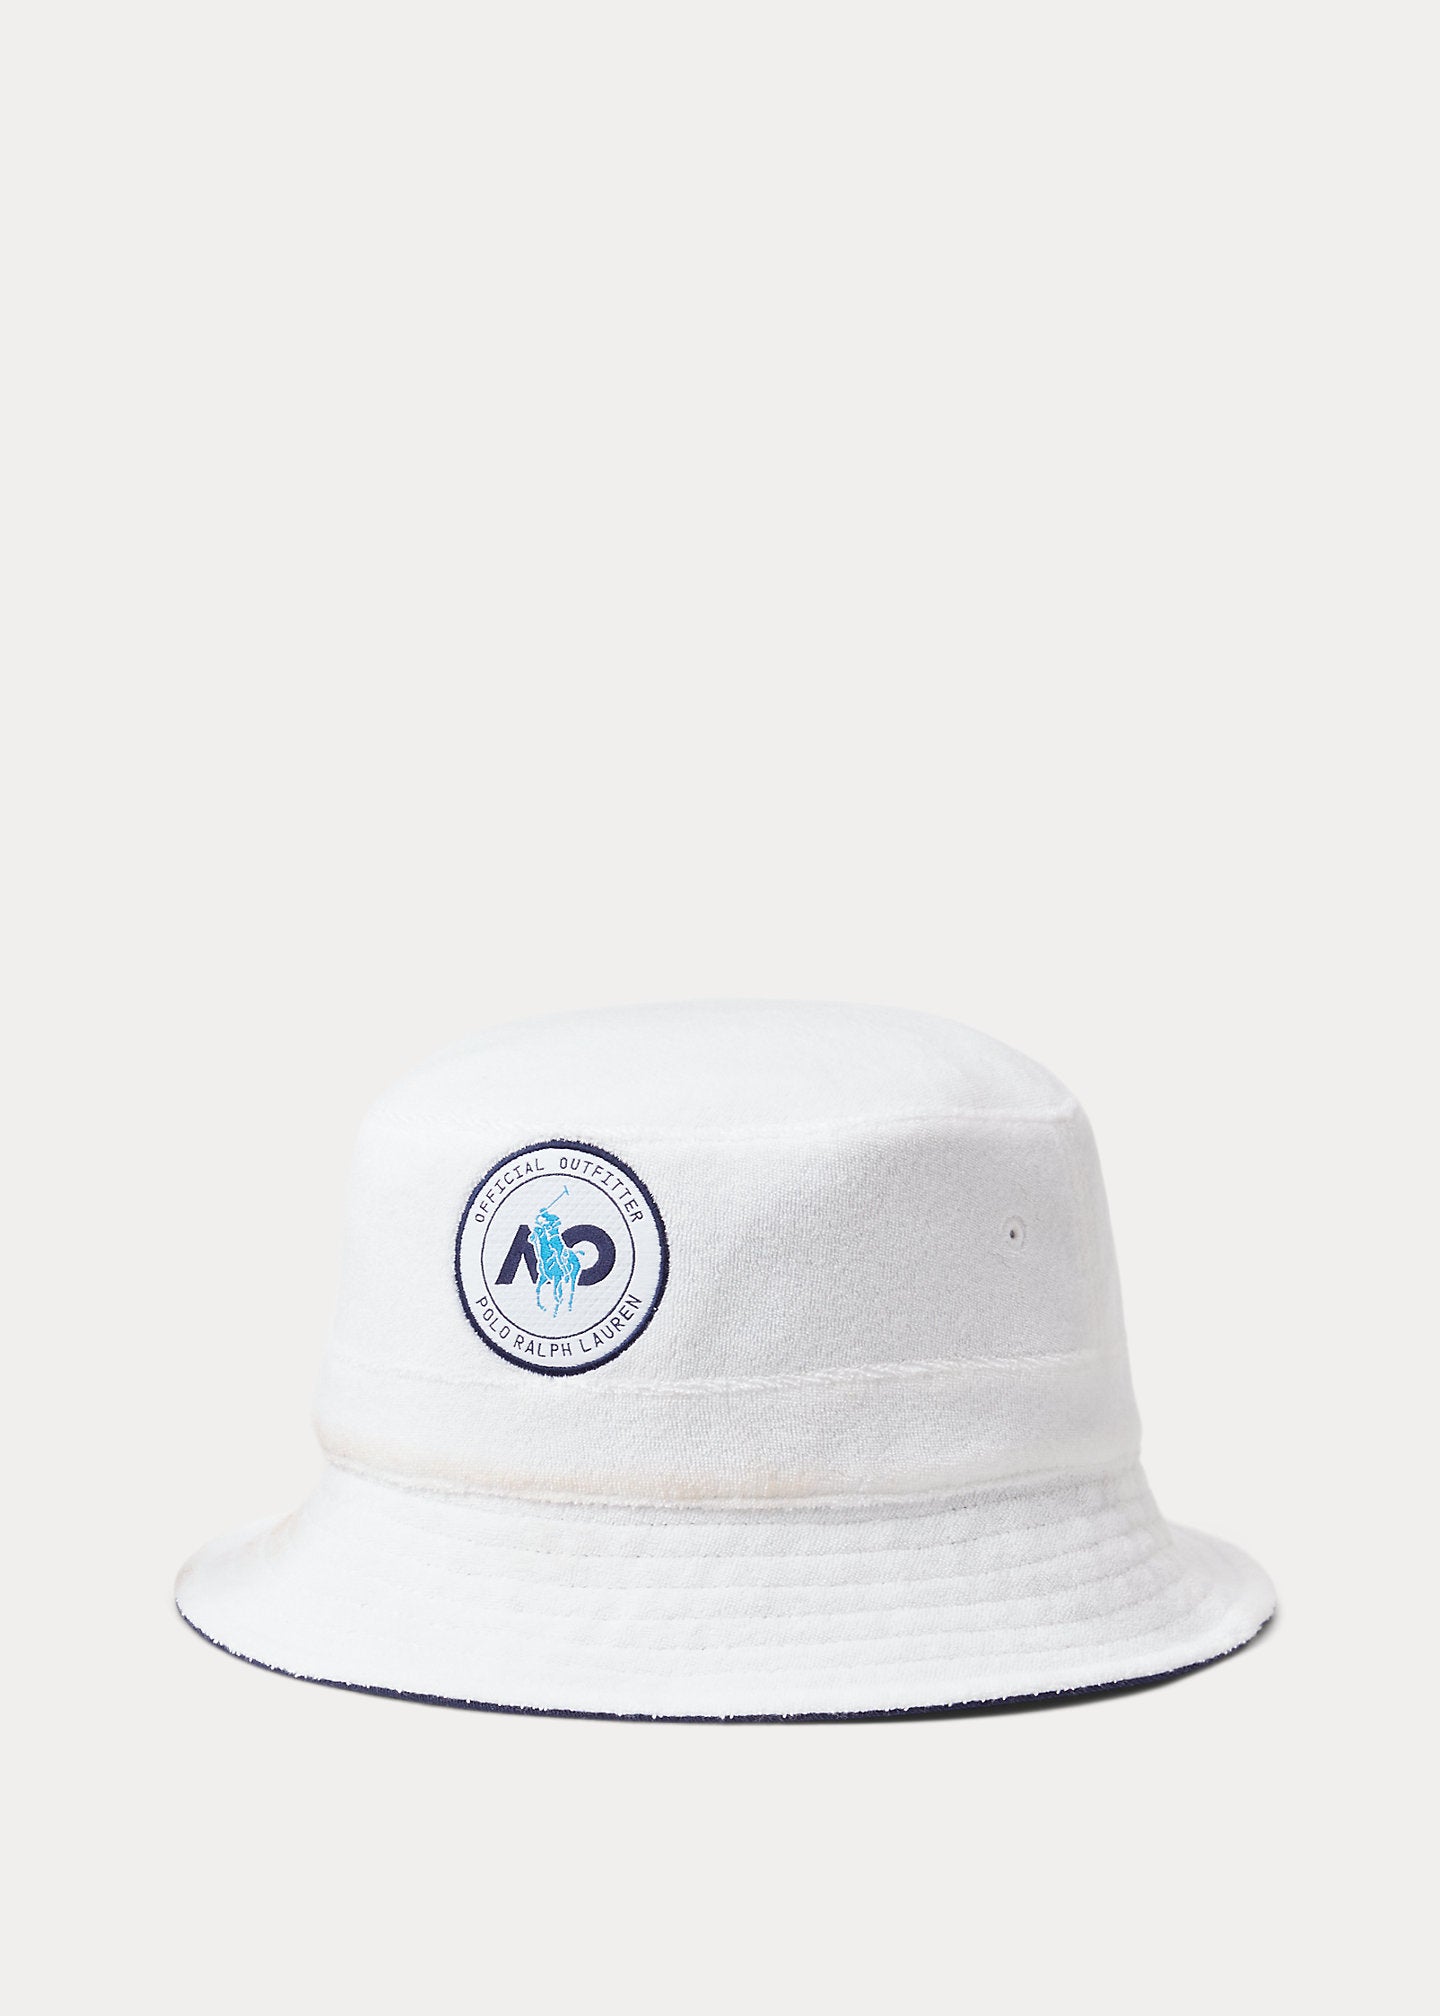 Ralph Lauren Hat Reversible Inside out Front View 